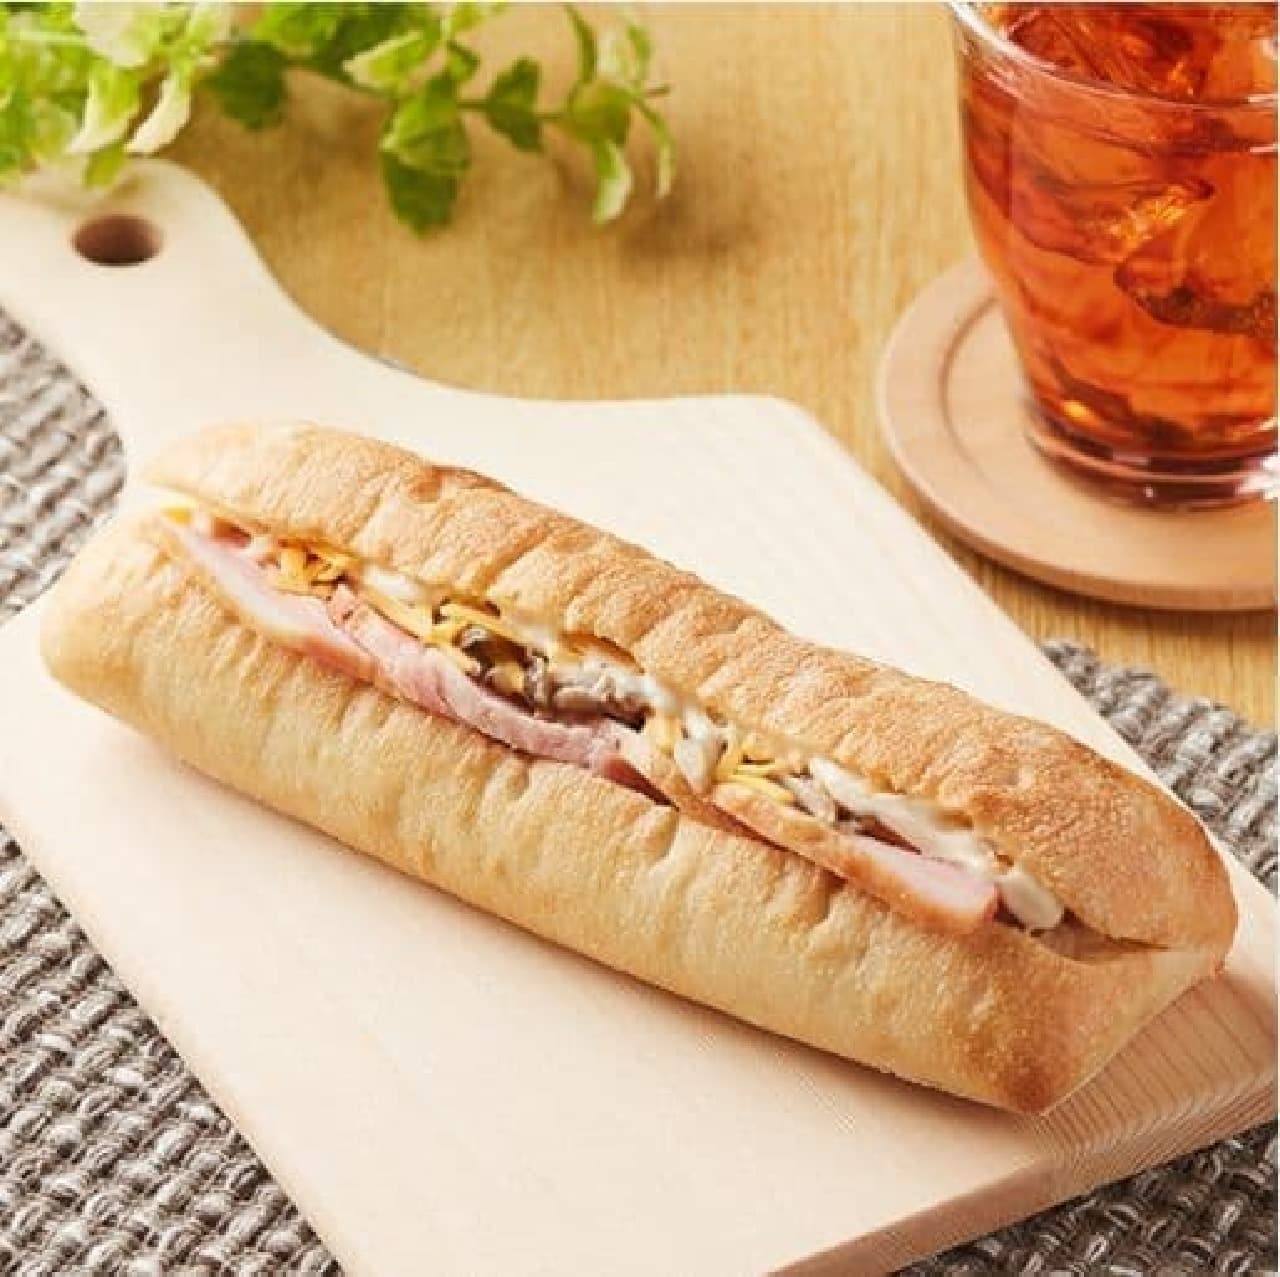 FamilyMart "Hot Sandwich Bacon Tokinoko"